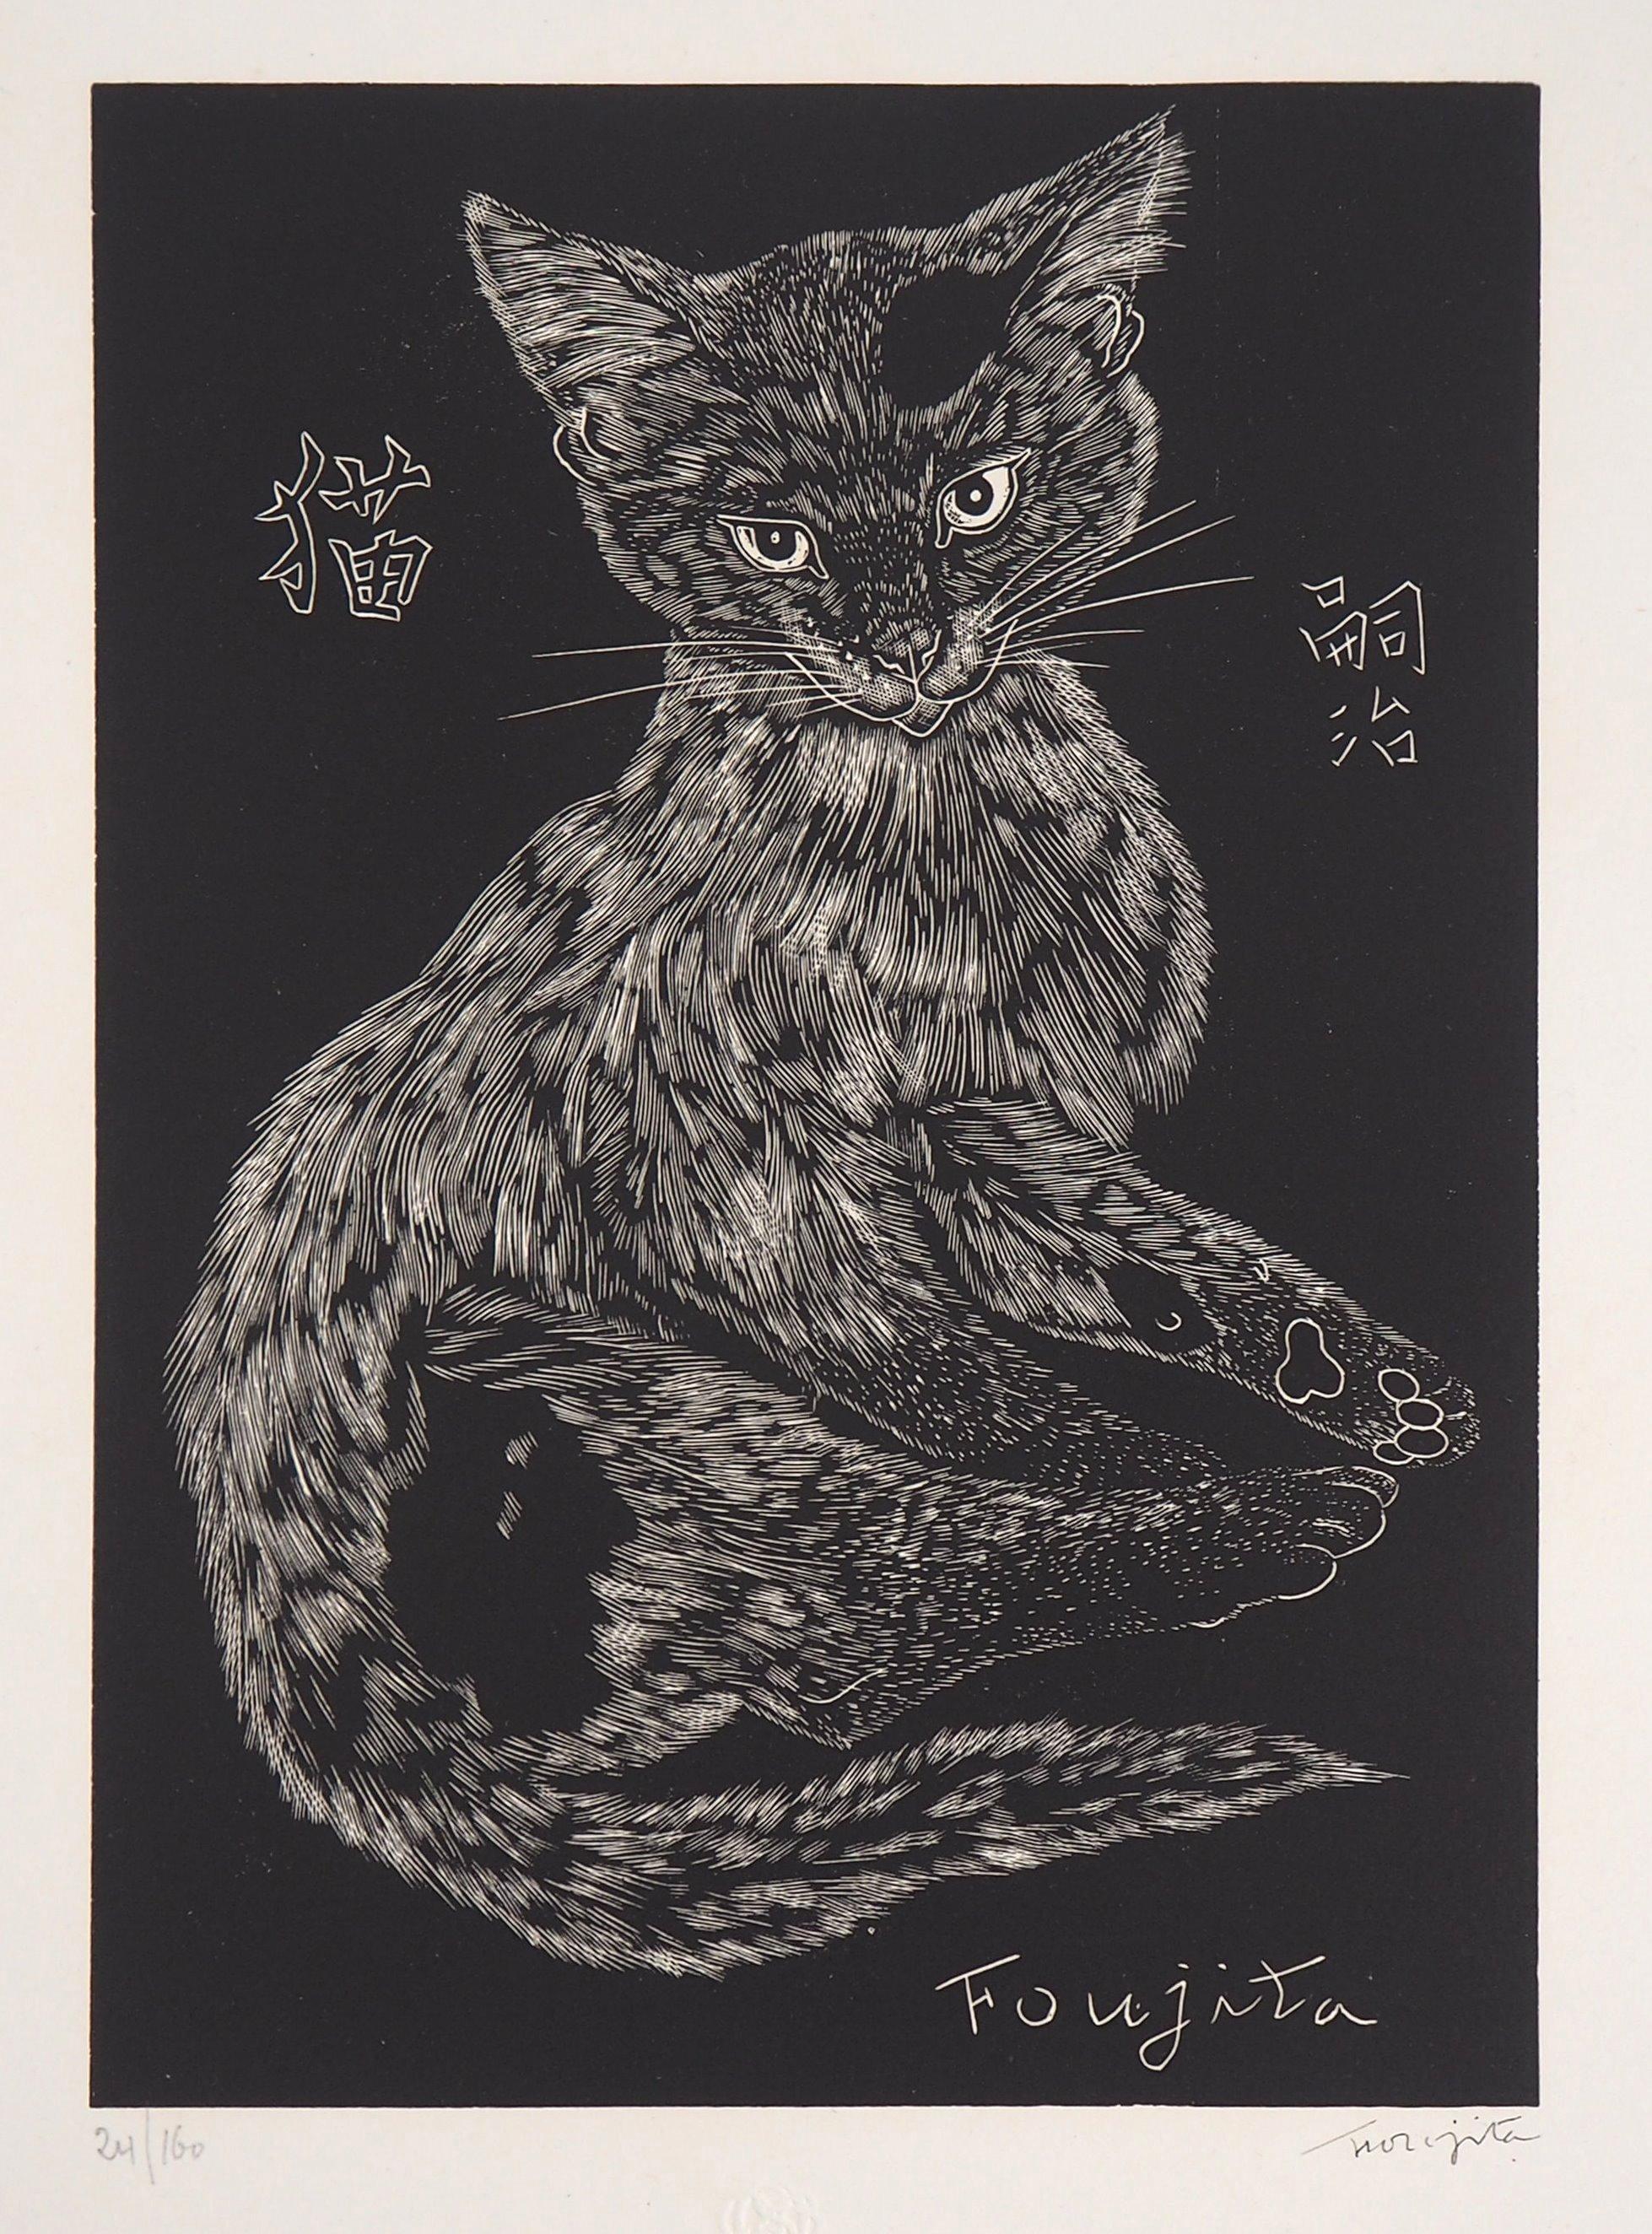 Leonard Tsuguharu Foujita Animal Print - Cat - Original woodcut, Handsigned and Numbered /160 - Buisson #27-03